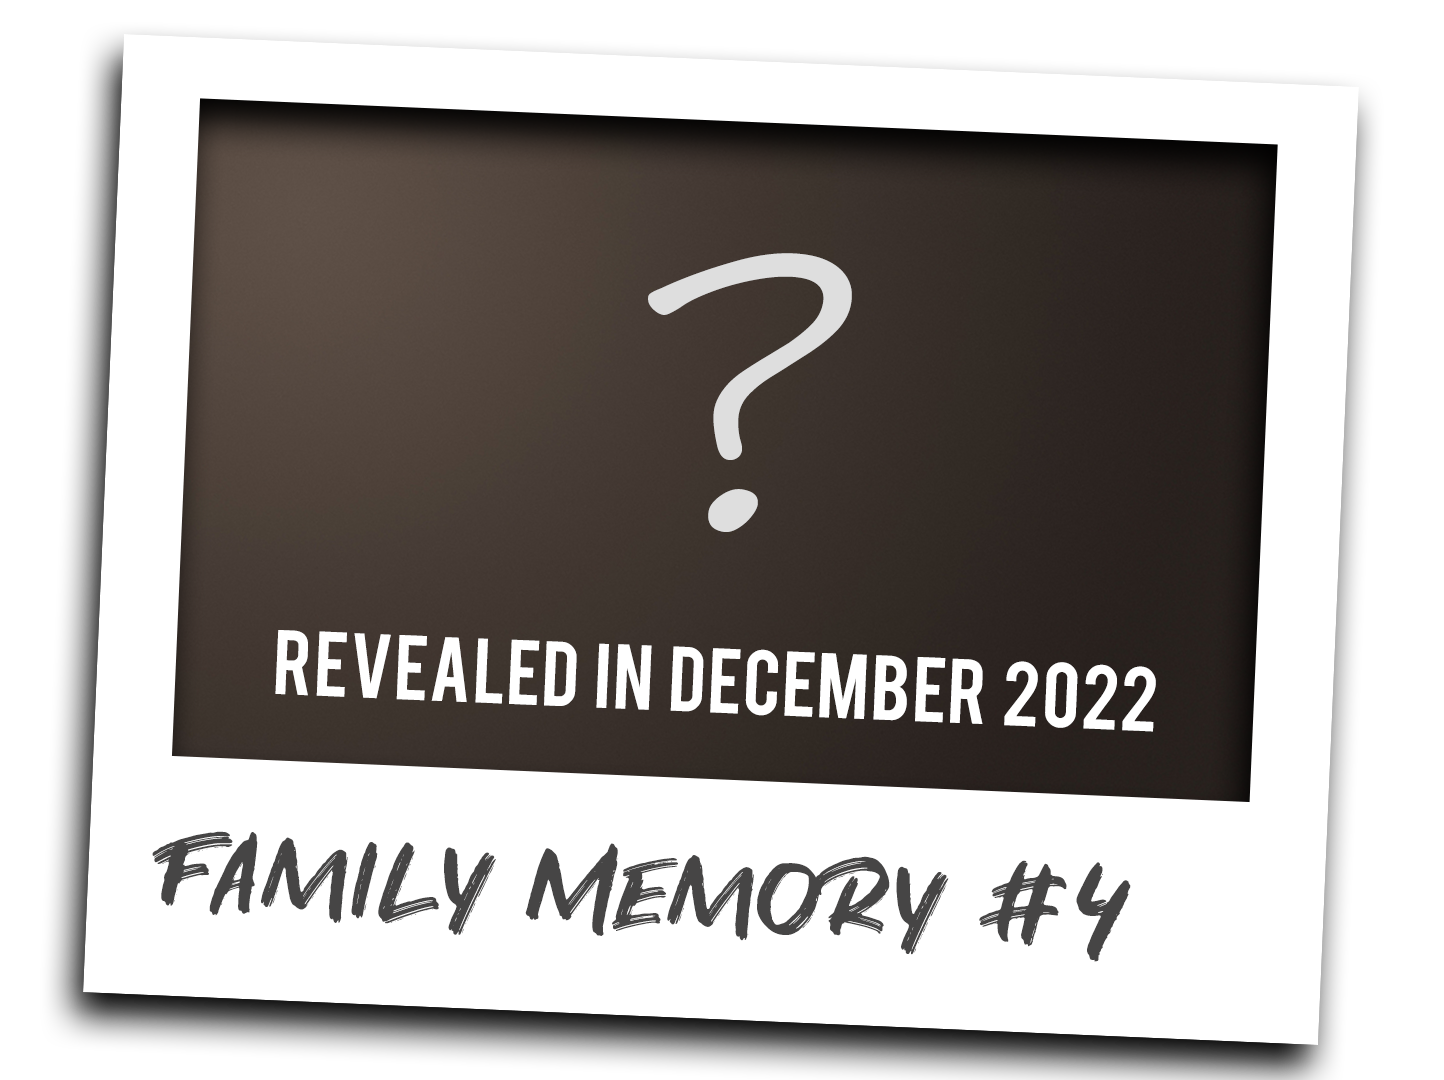 Family Memory #4